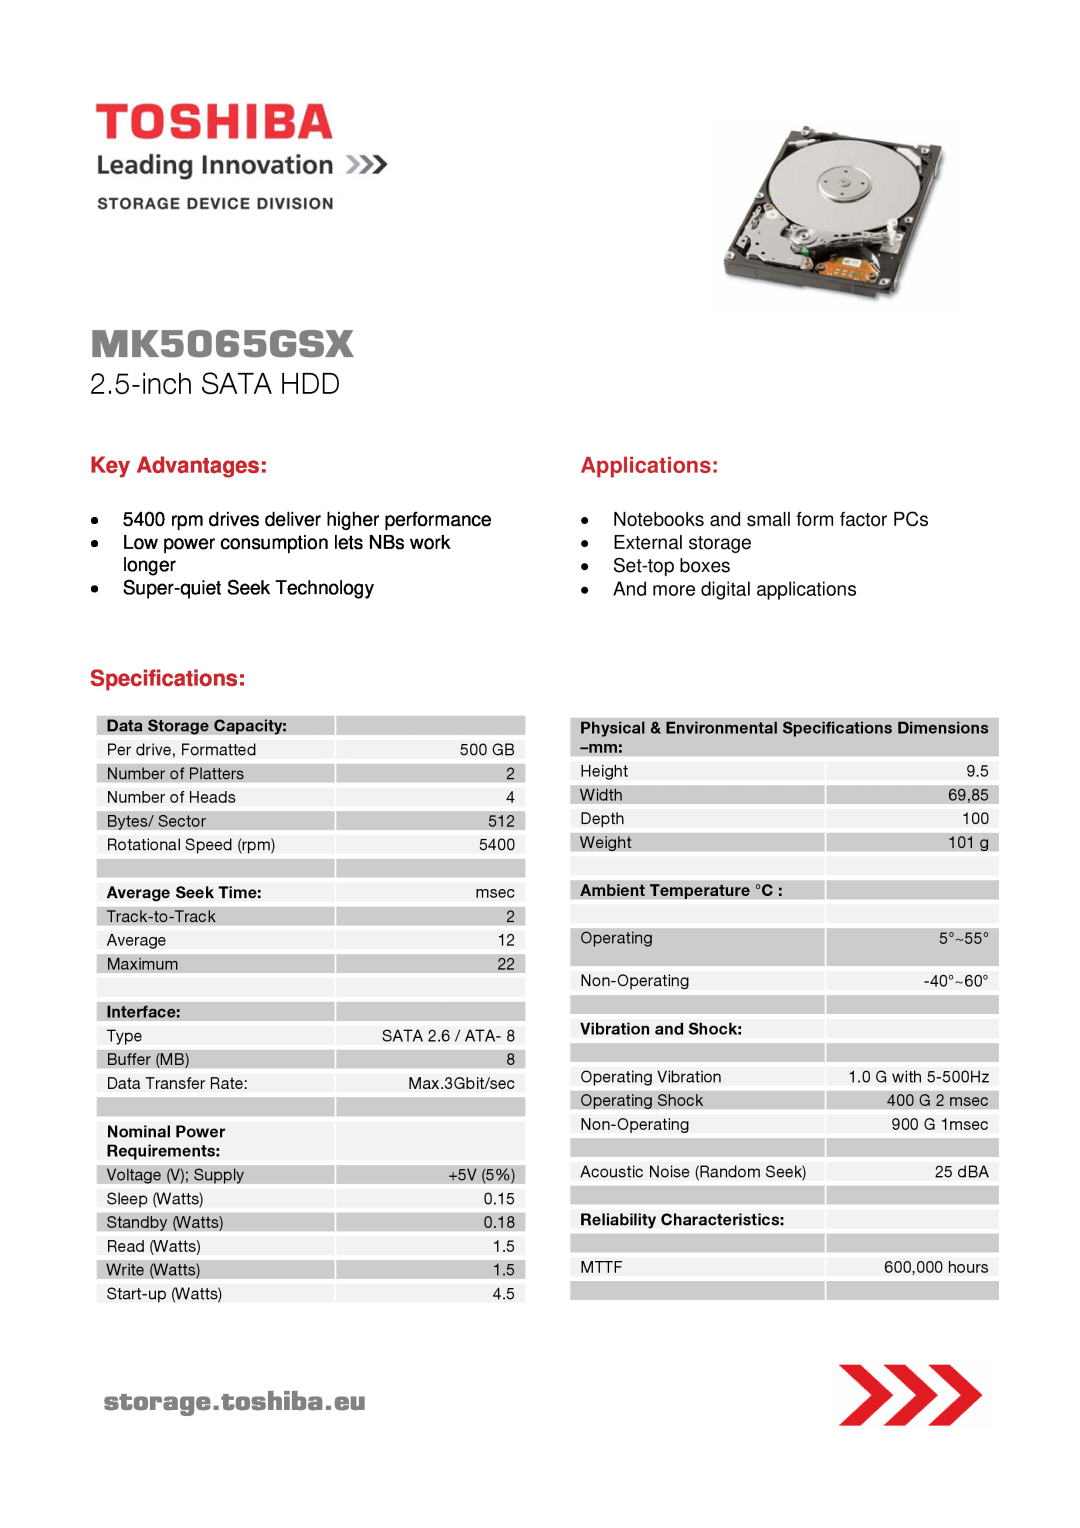 Toshiba MK5065GSX specifications inch SATA HDD, storage.toshiba.eu, Key Advantages, Applications, Specifications, longer 